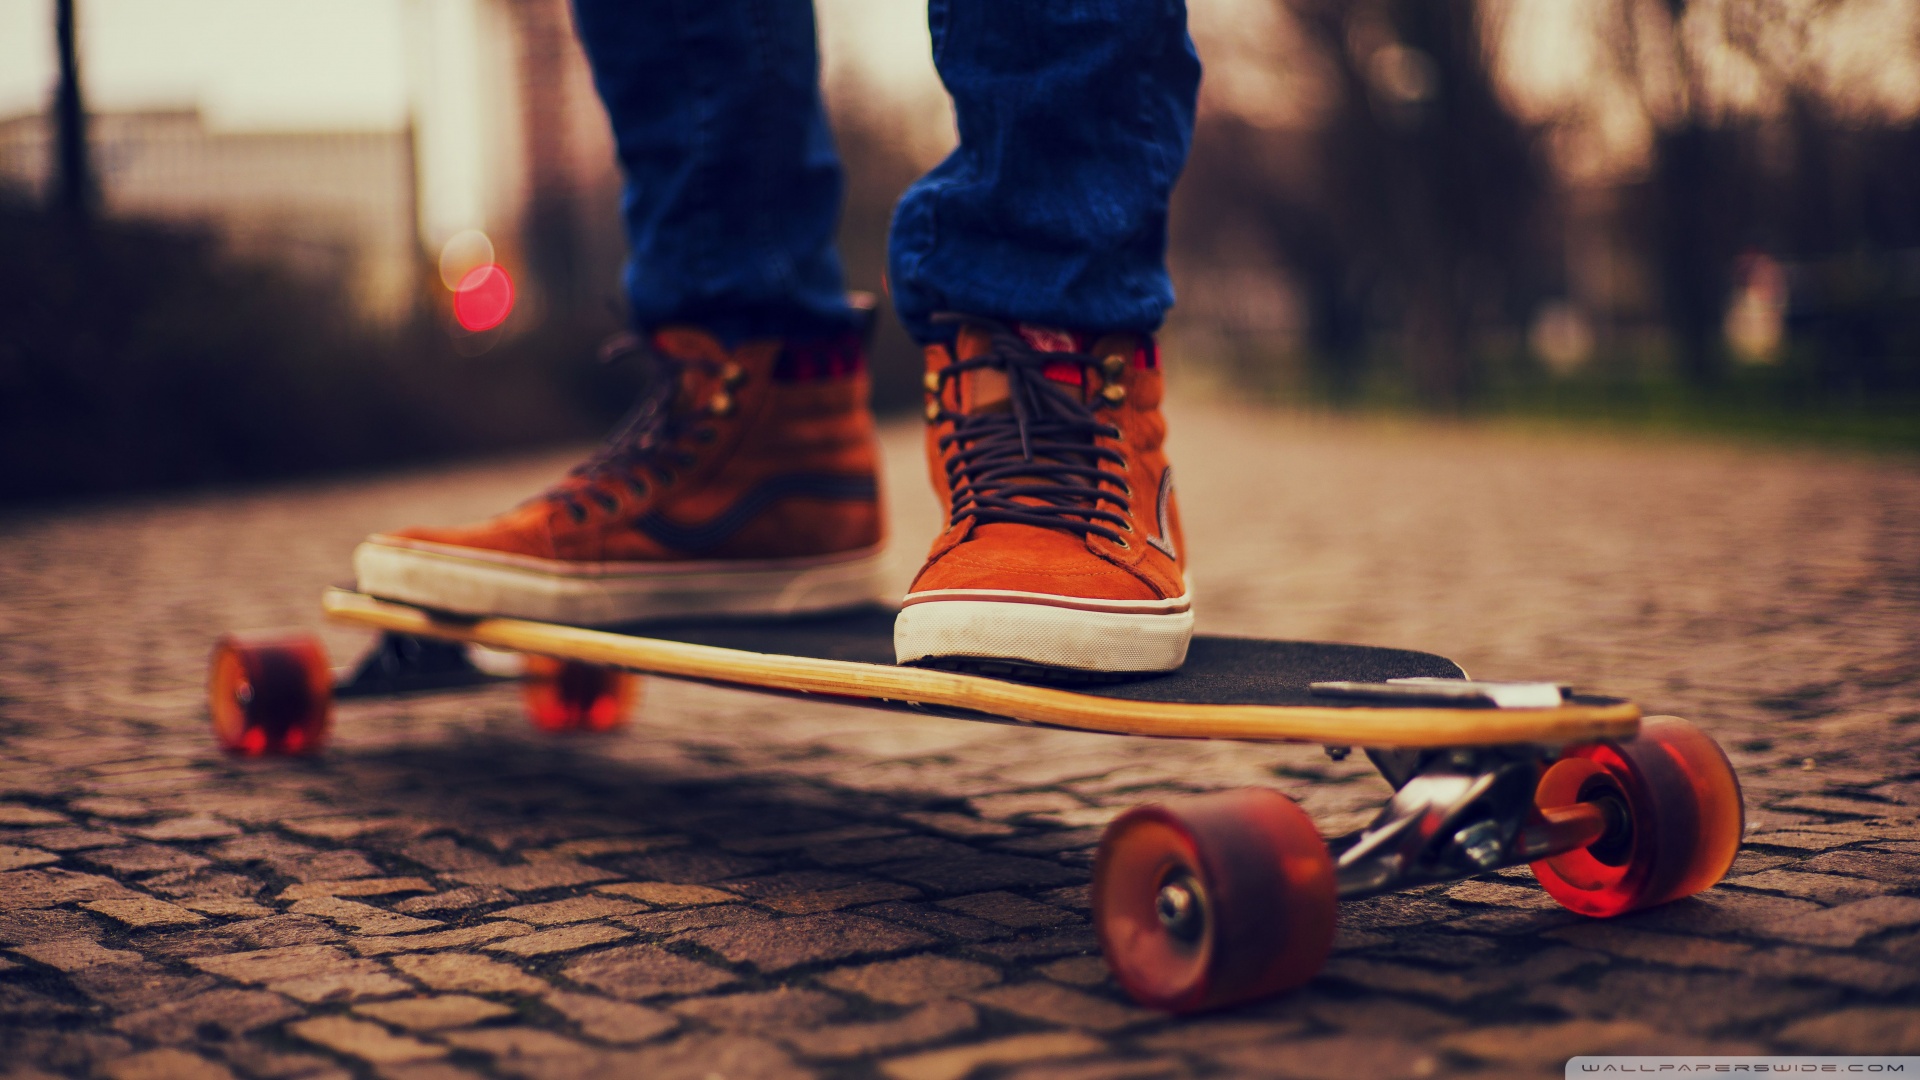 lunga carta da parati hd,longboarding,andare con lo skateboard,skateboard,longboard,calzature